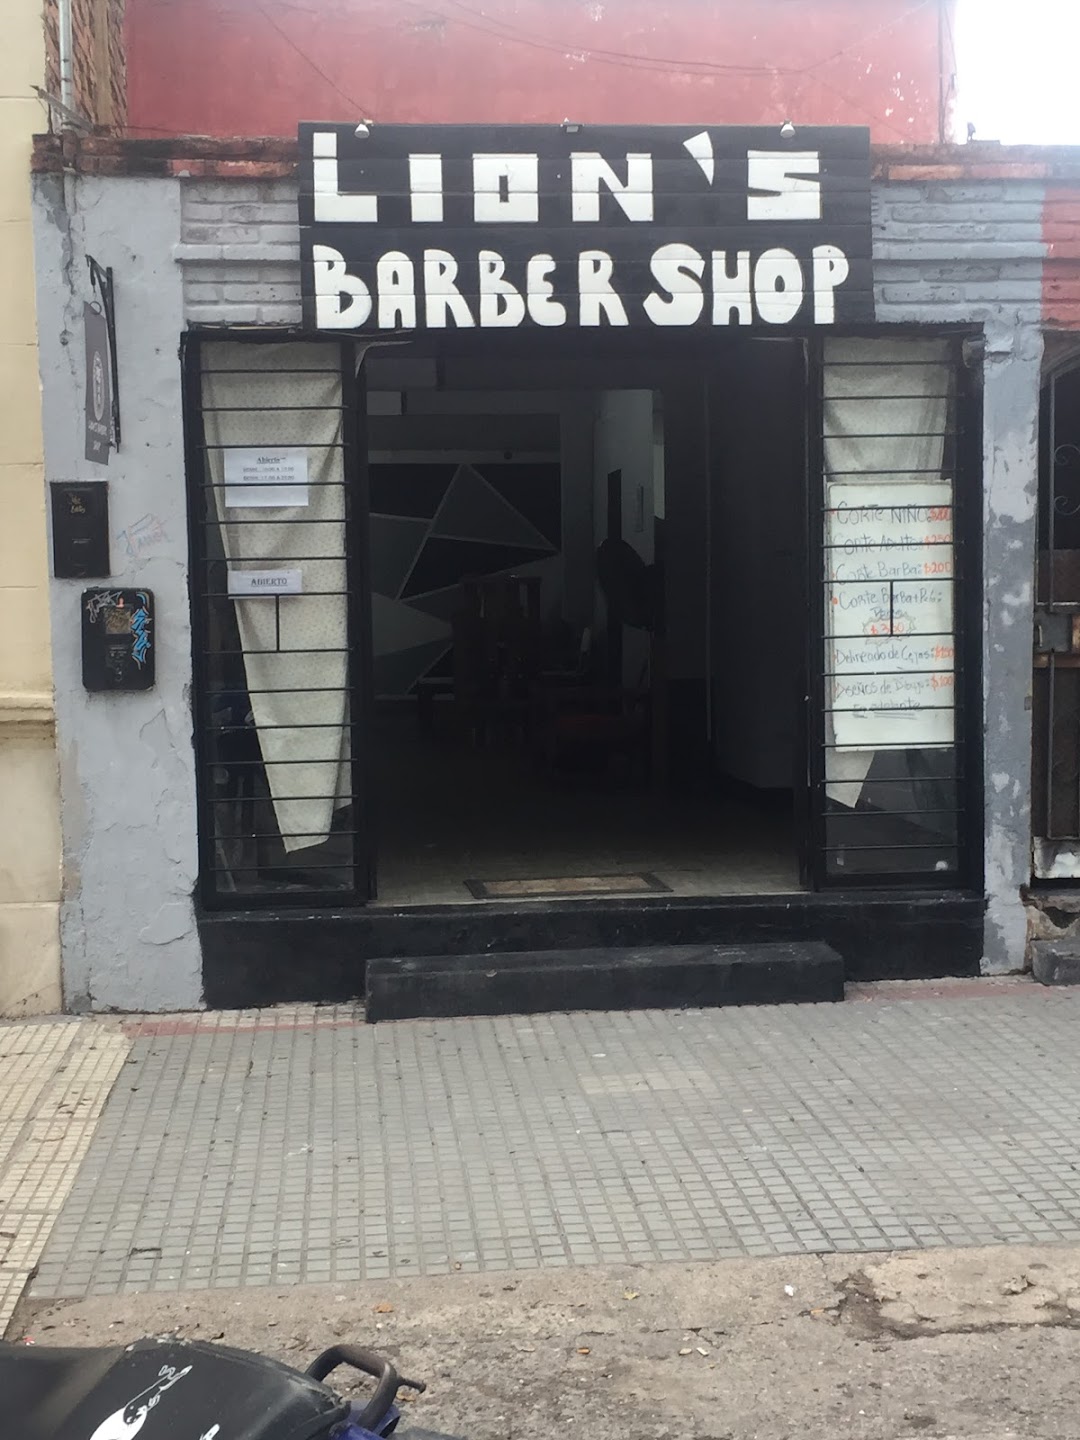 Lions barber shop